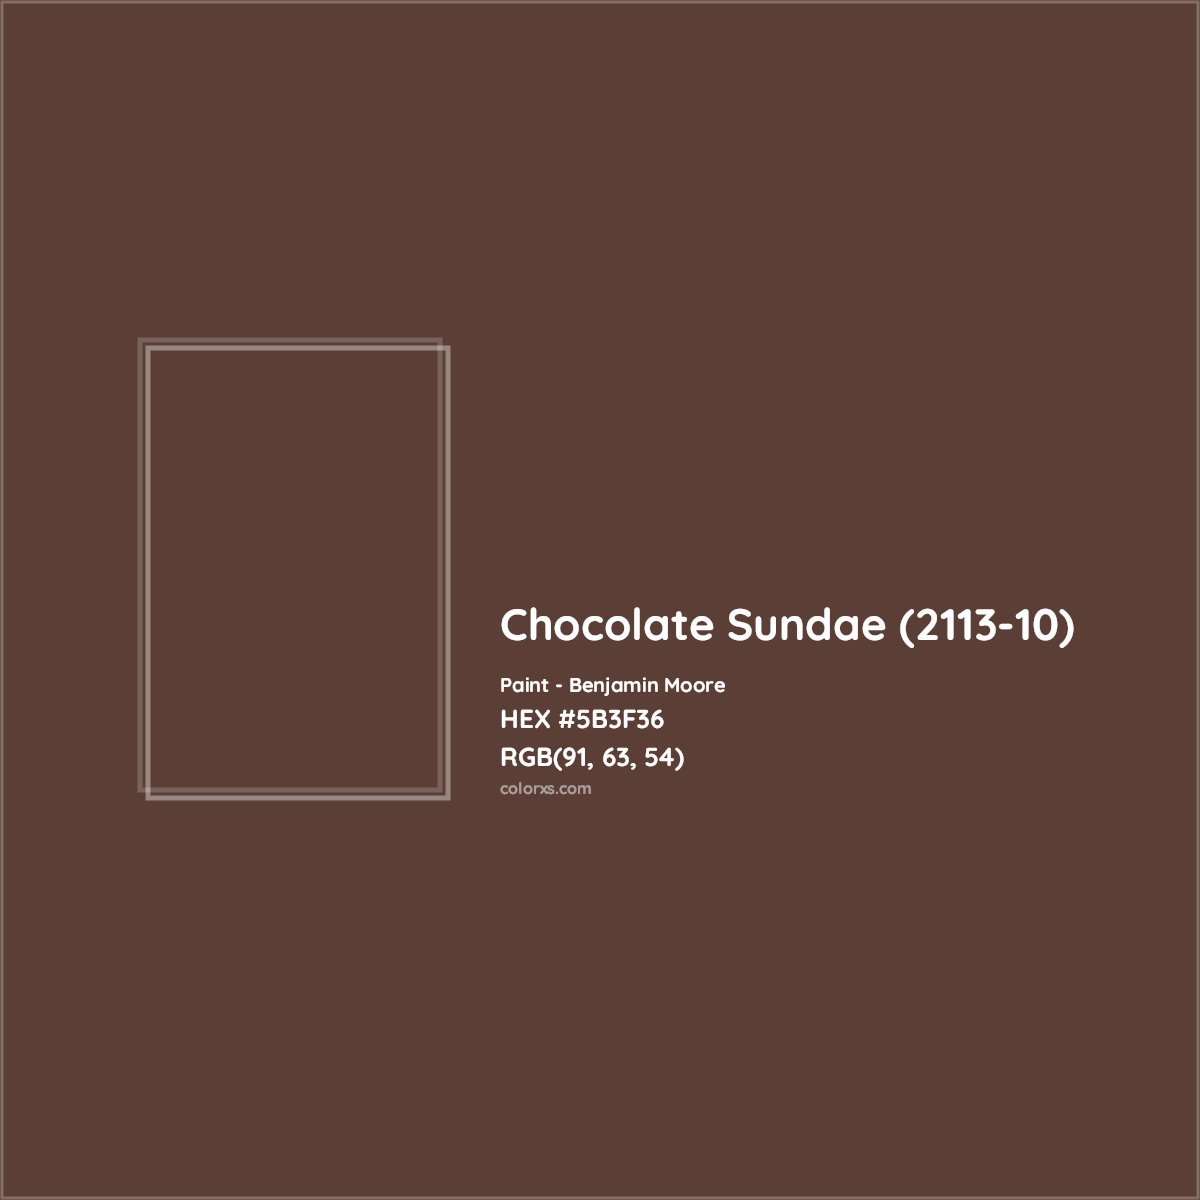 HEX #5B3F36 Chocolate Sundae (2113-10) Paint Benjamin Moore - Color Code